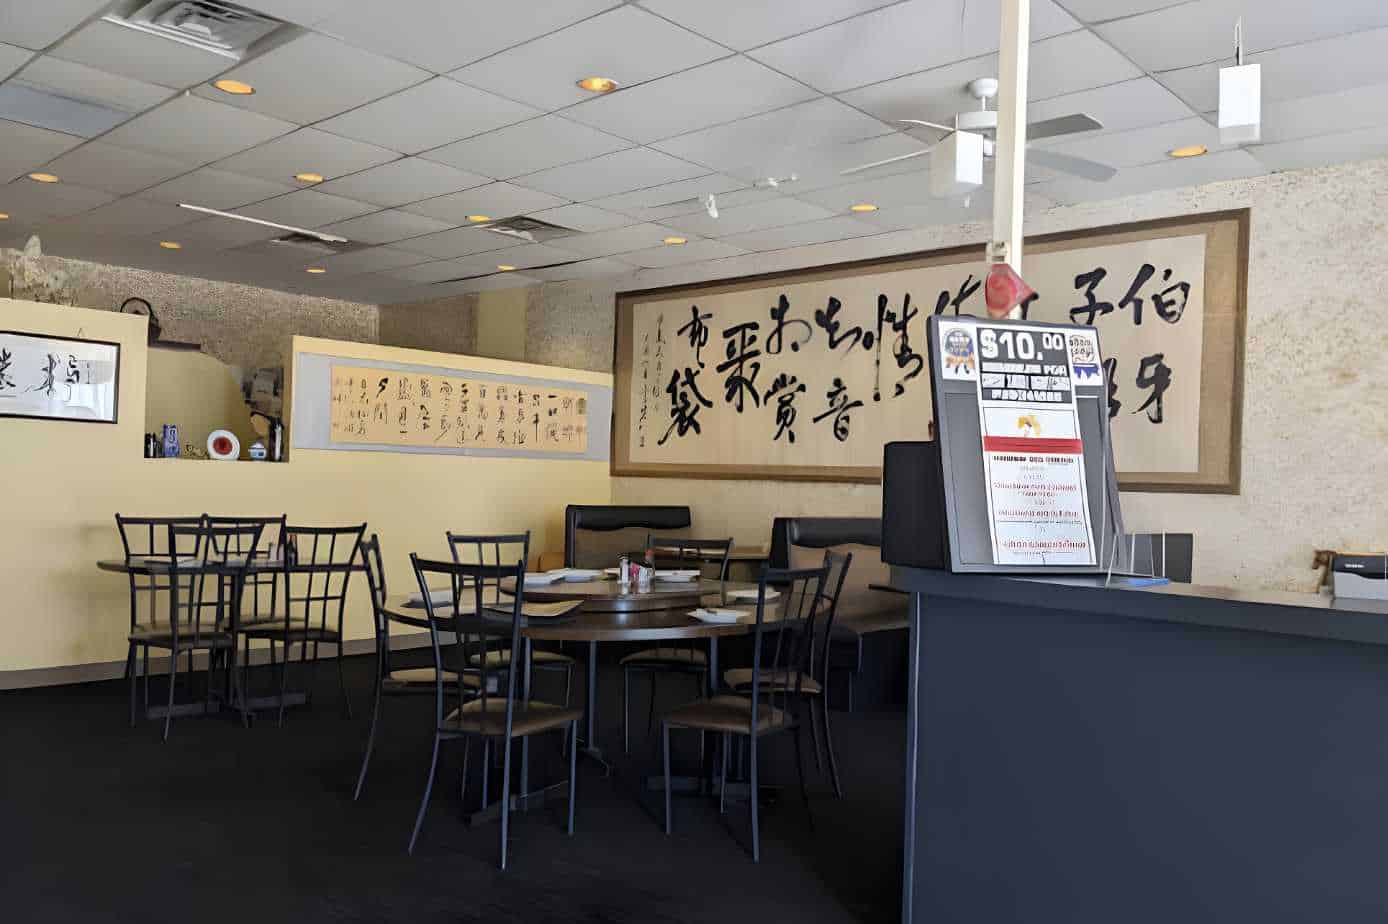 Budai Best Chinese Restaurants in Albuquerque, NM